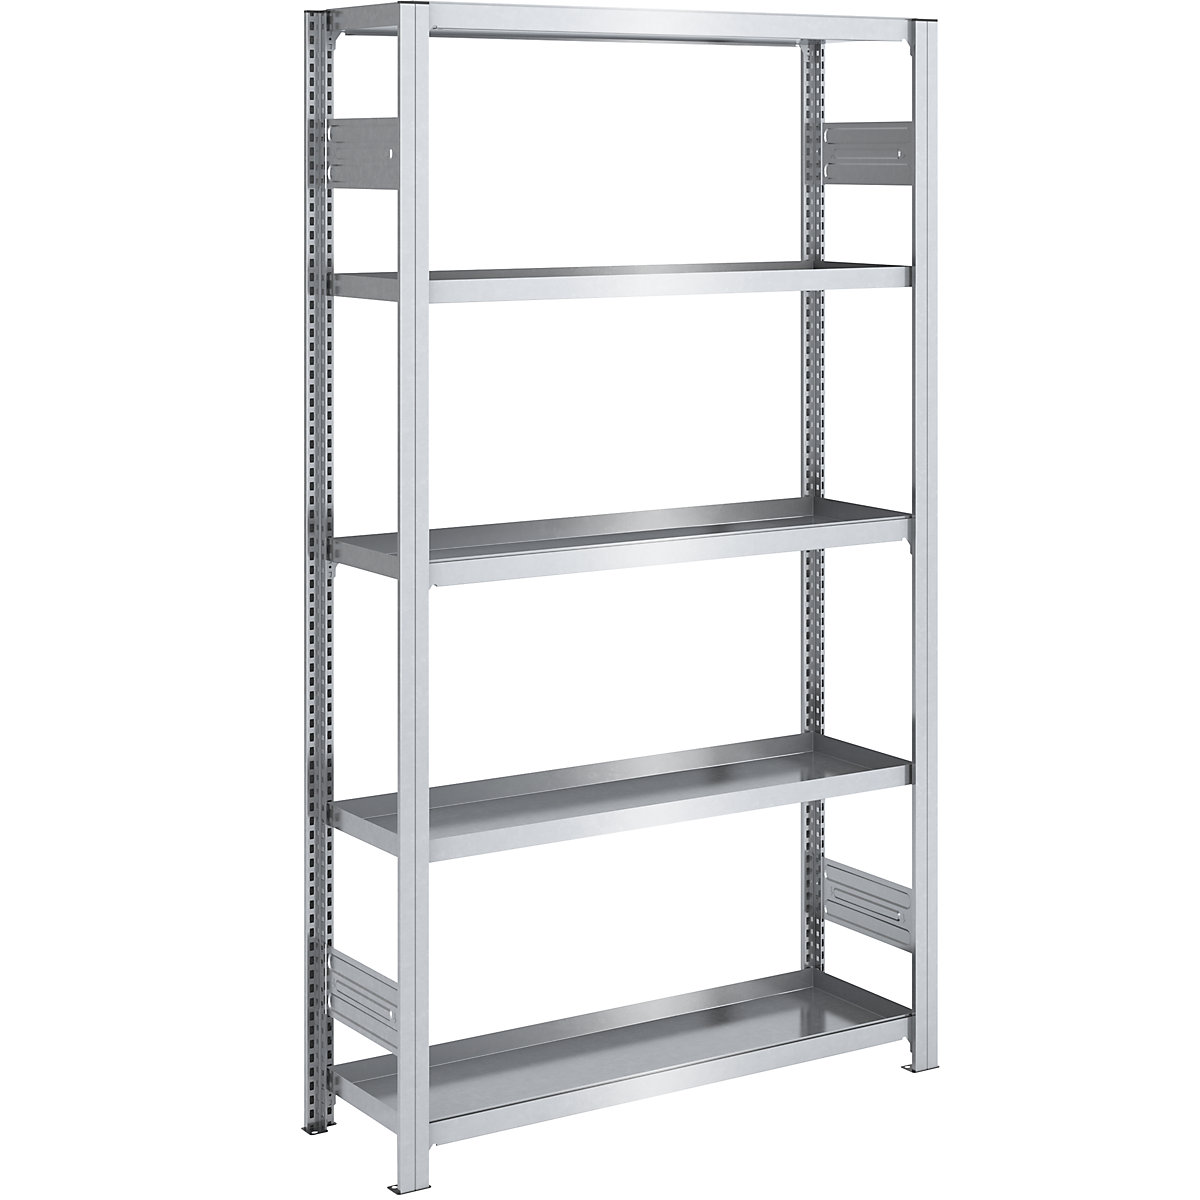 Tray shelf unit – hofe, shelf unit height 2000 mm, tray width 1000 mm, tray depth 400 mm, standard shelf unit